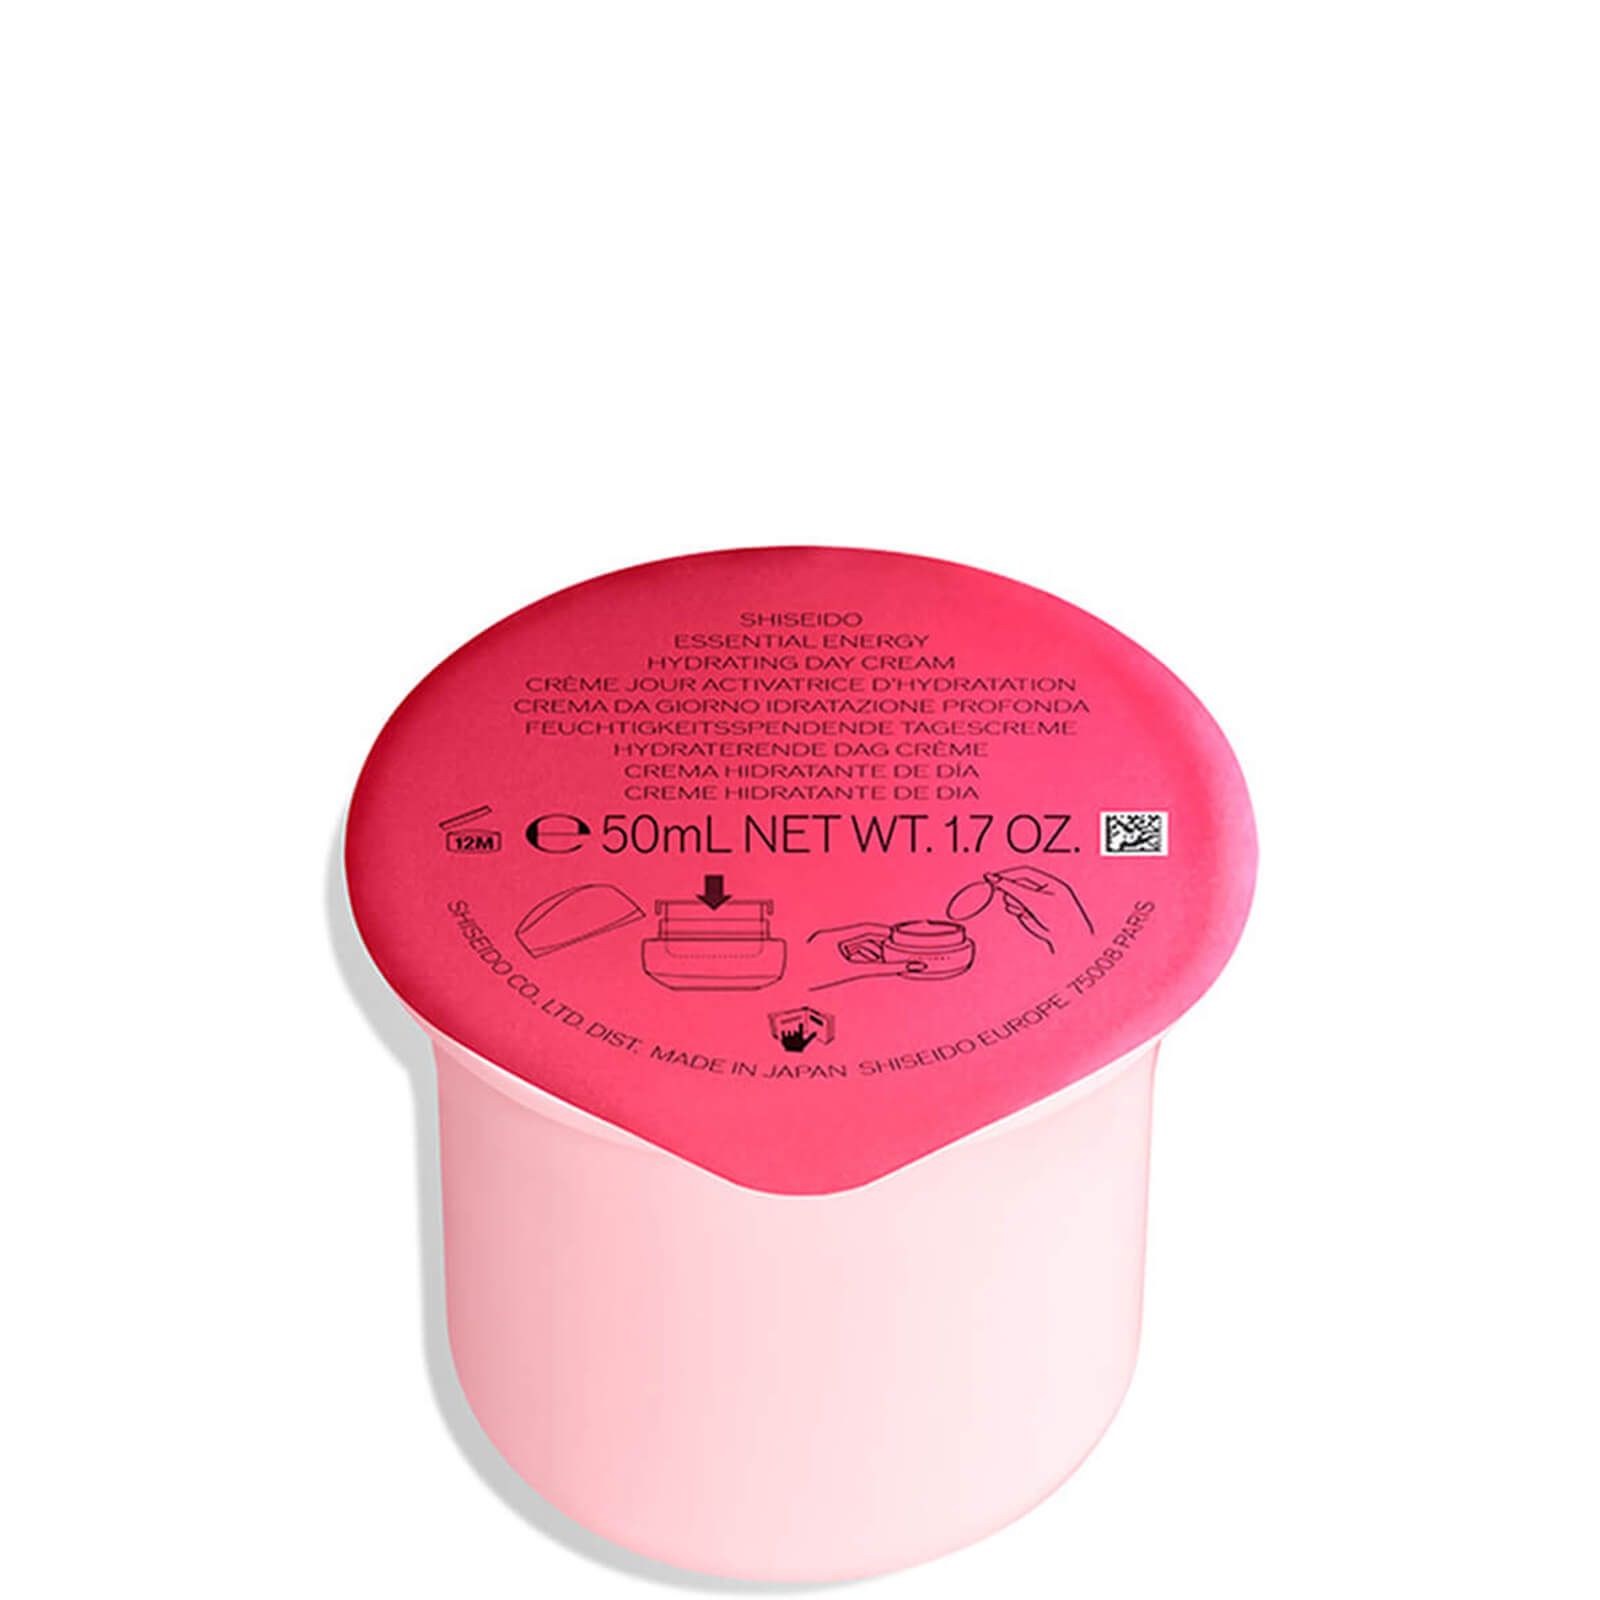 Шисейдо Essential Energy Hydrating Cream. Essential Energy для волос. Shiseido 50